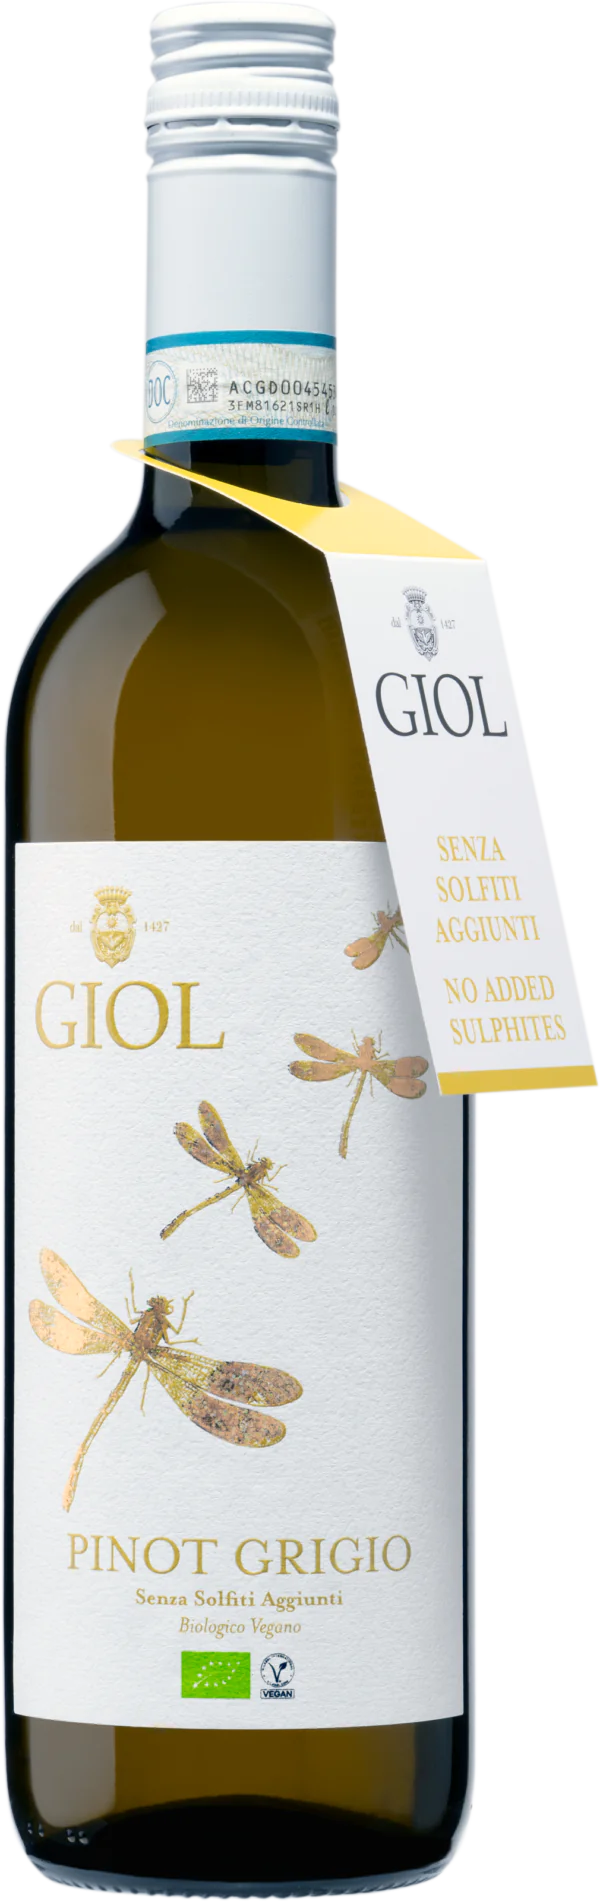 Pinot Grigio - Giol